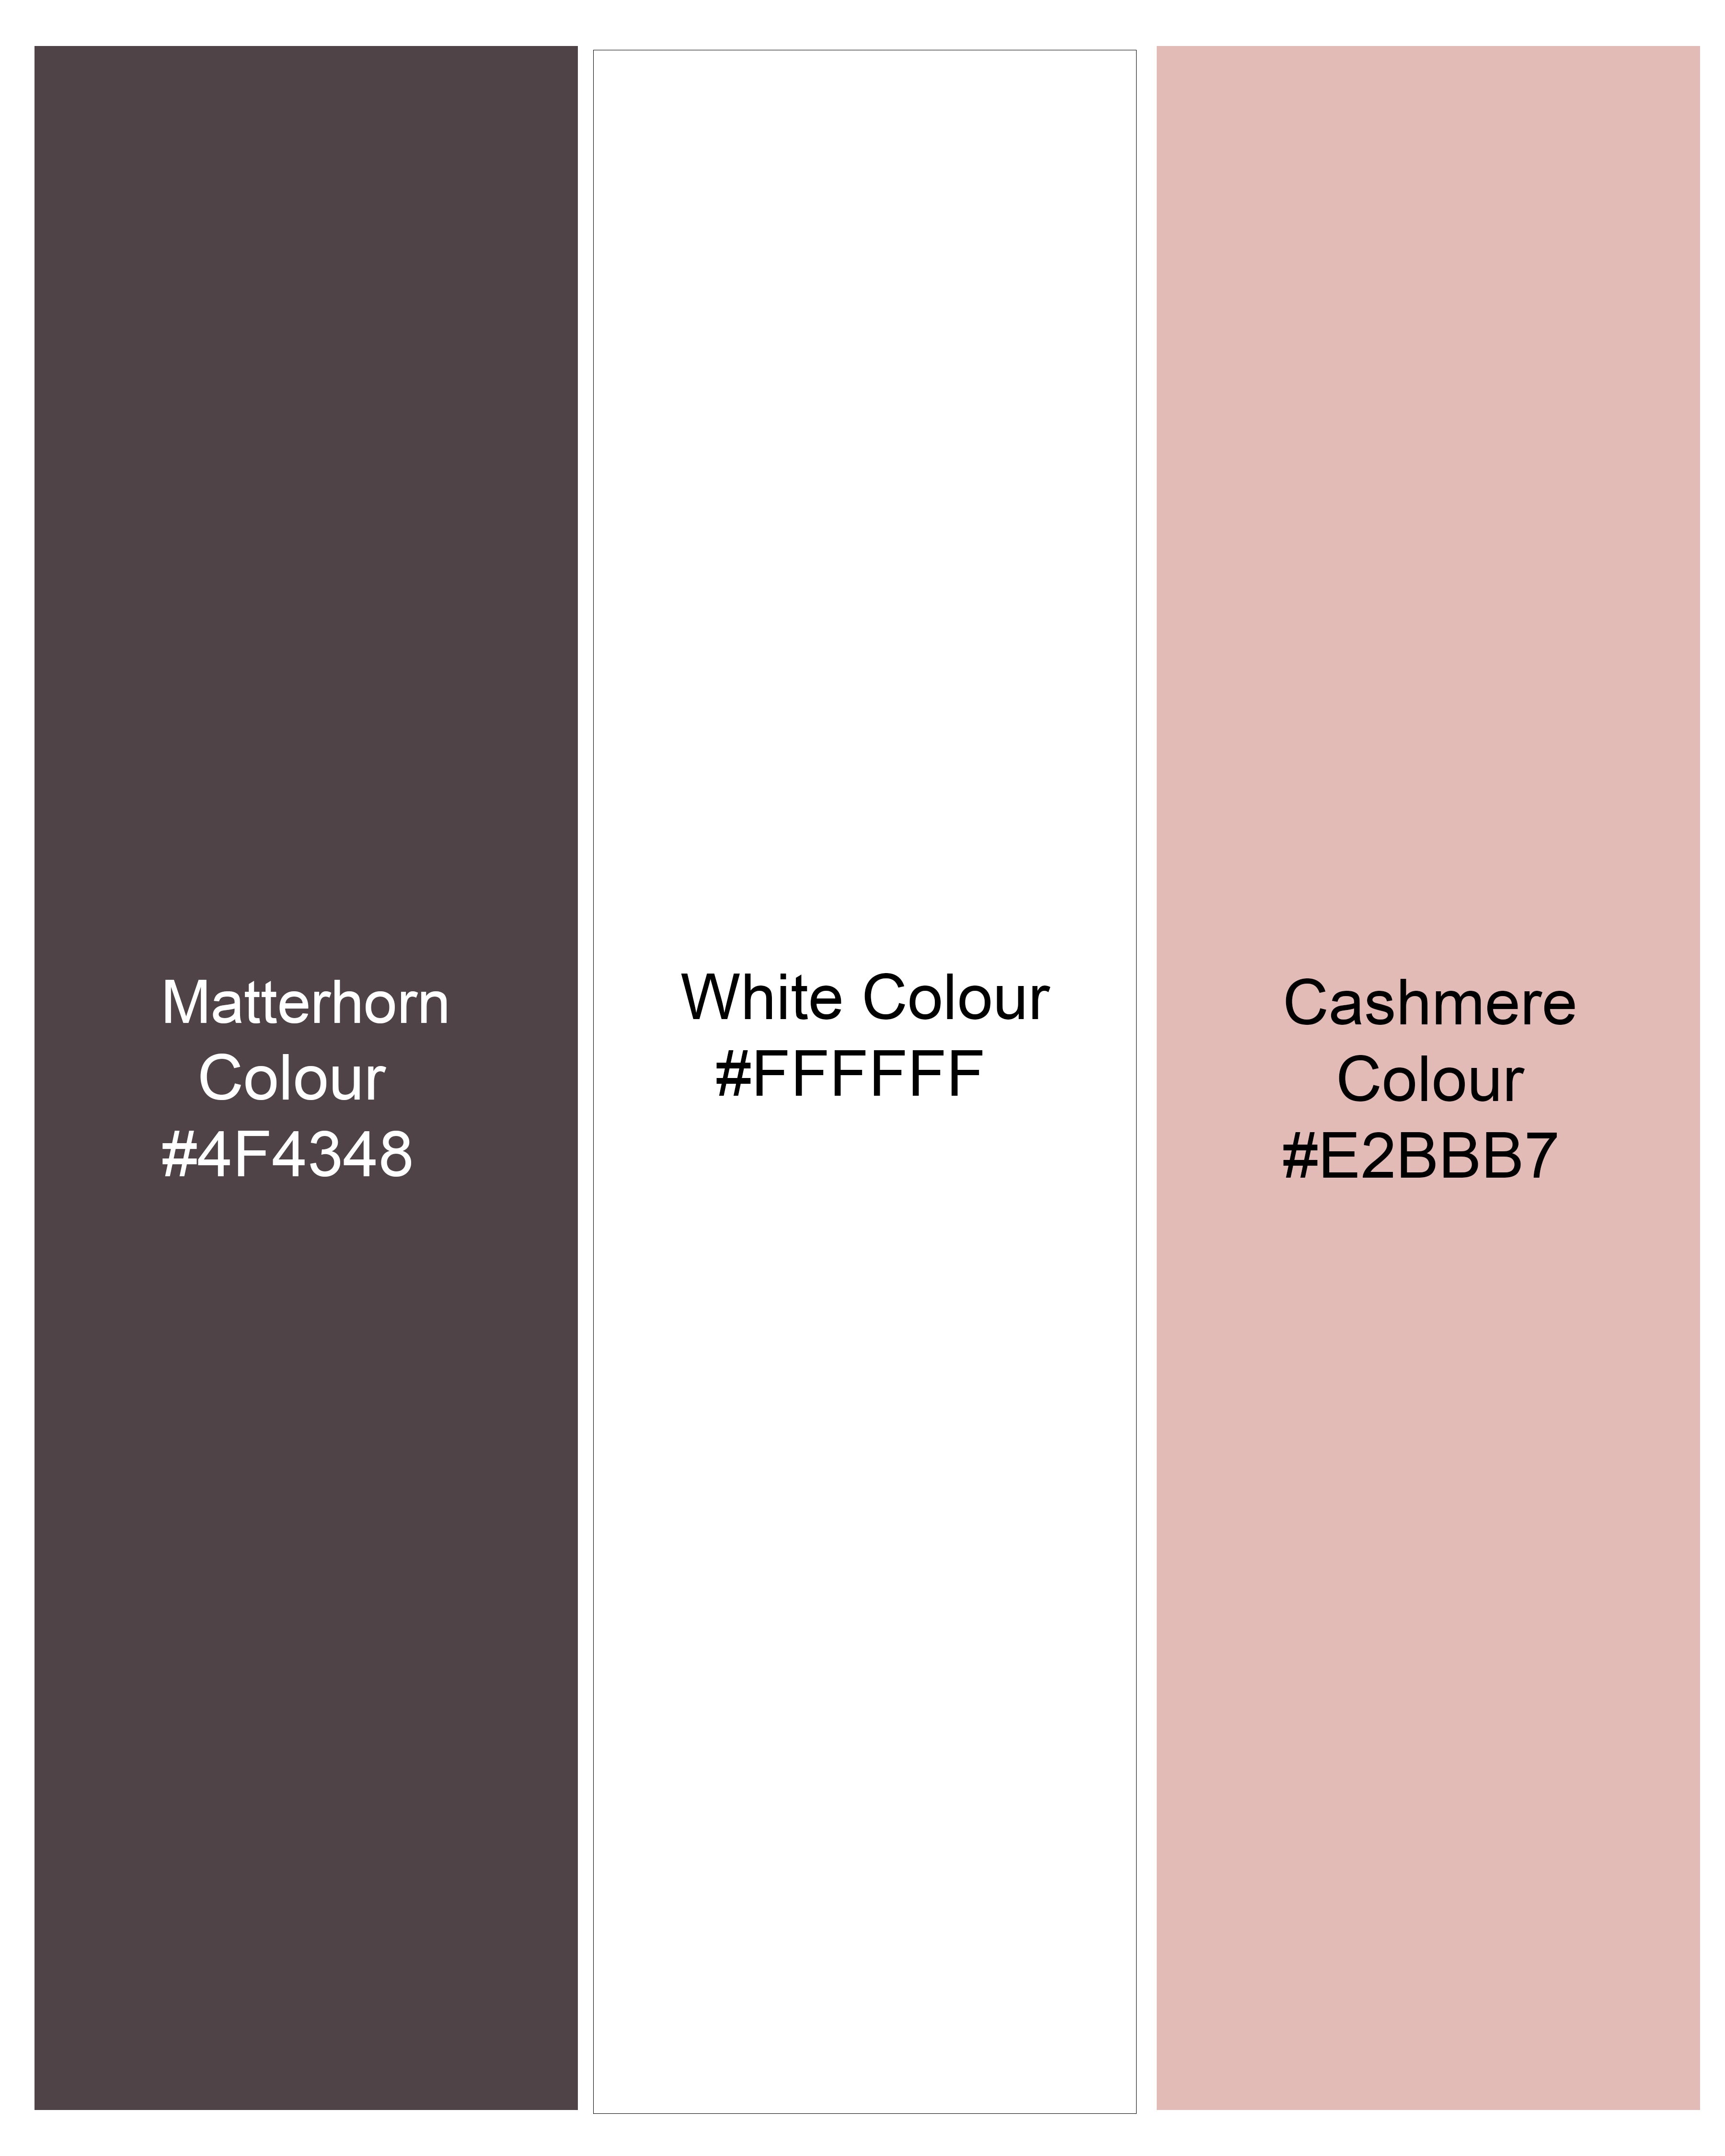 Matterhorn Brown with Cashmere Pink and White Paisley Printed Super Soft Premium Cotton Kurta Shirt 9242-KS-38,9242-KS-H-38,9242-KS-39,9242-KS-H-39,9242-KS-40,9242-KS-H-40,9242-KS-42,9242-KS-H-42,9242-KS-44,9242-KS-H-44,9242-KS-46,9242-KS-H-46,9242-KS-48,9242-KS-H-48,9242-KS-50,9242-KS-H-50,9242-KS-52,9242-KS-H-52